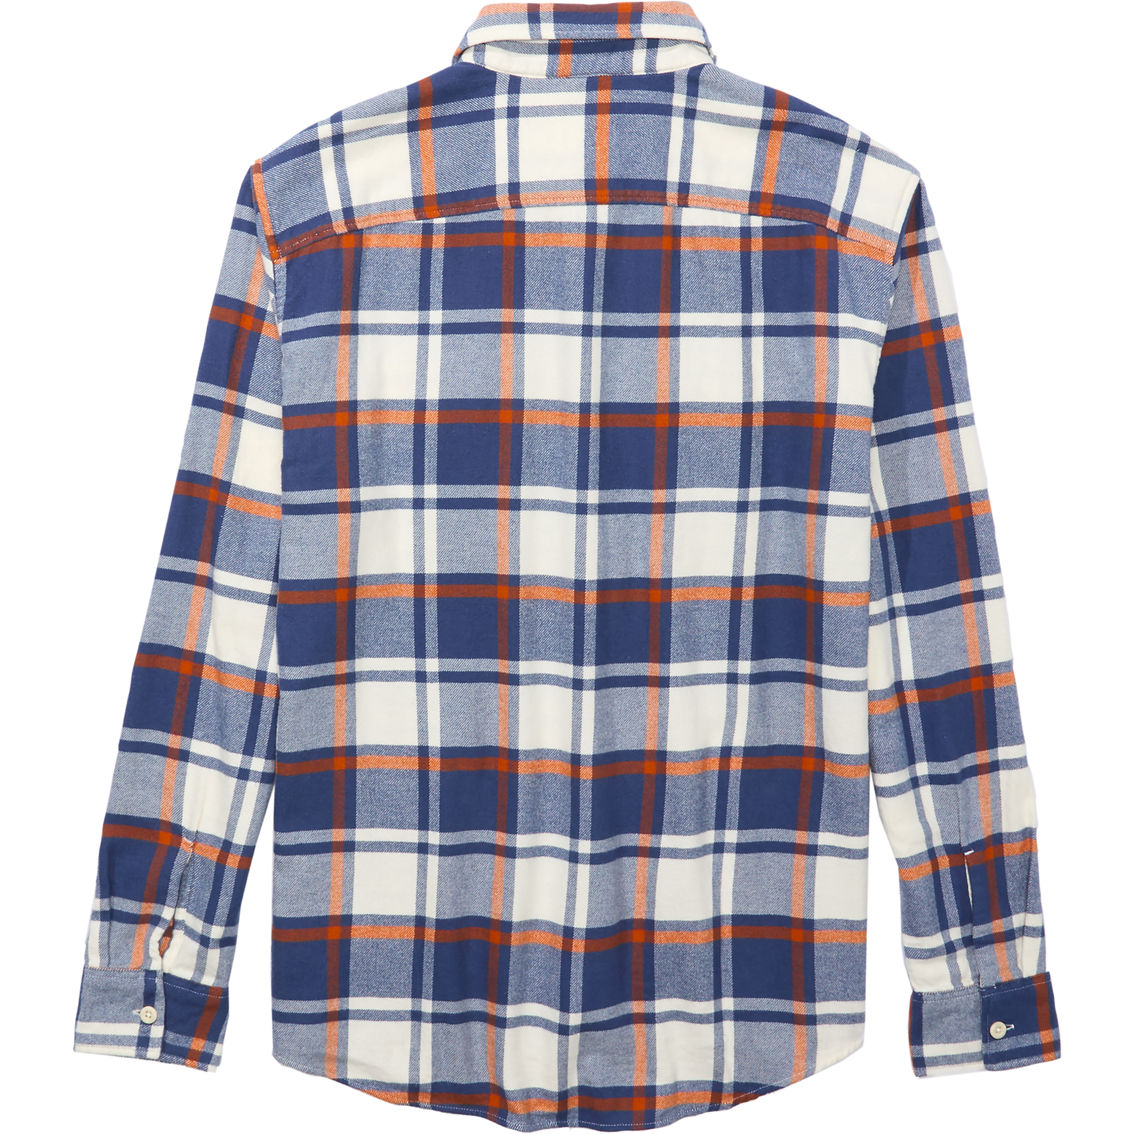 American Eagle Super Soft Flannel Shirt - Image 2 of 2